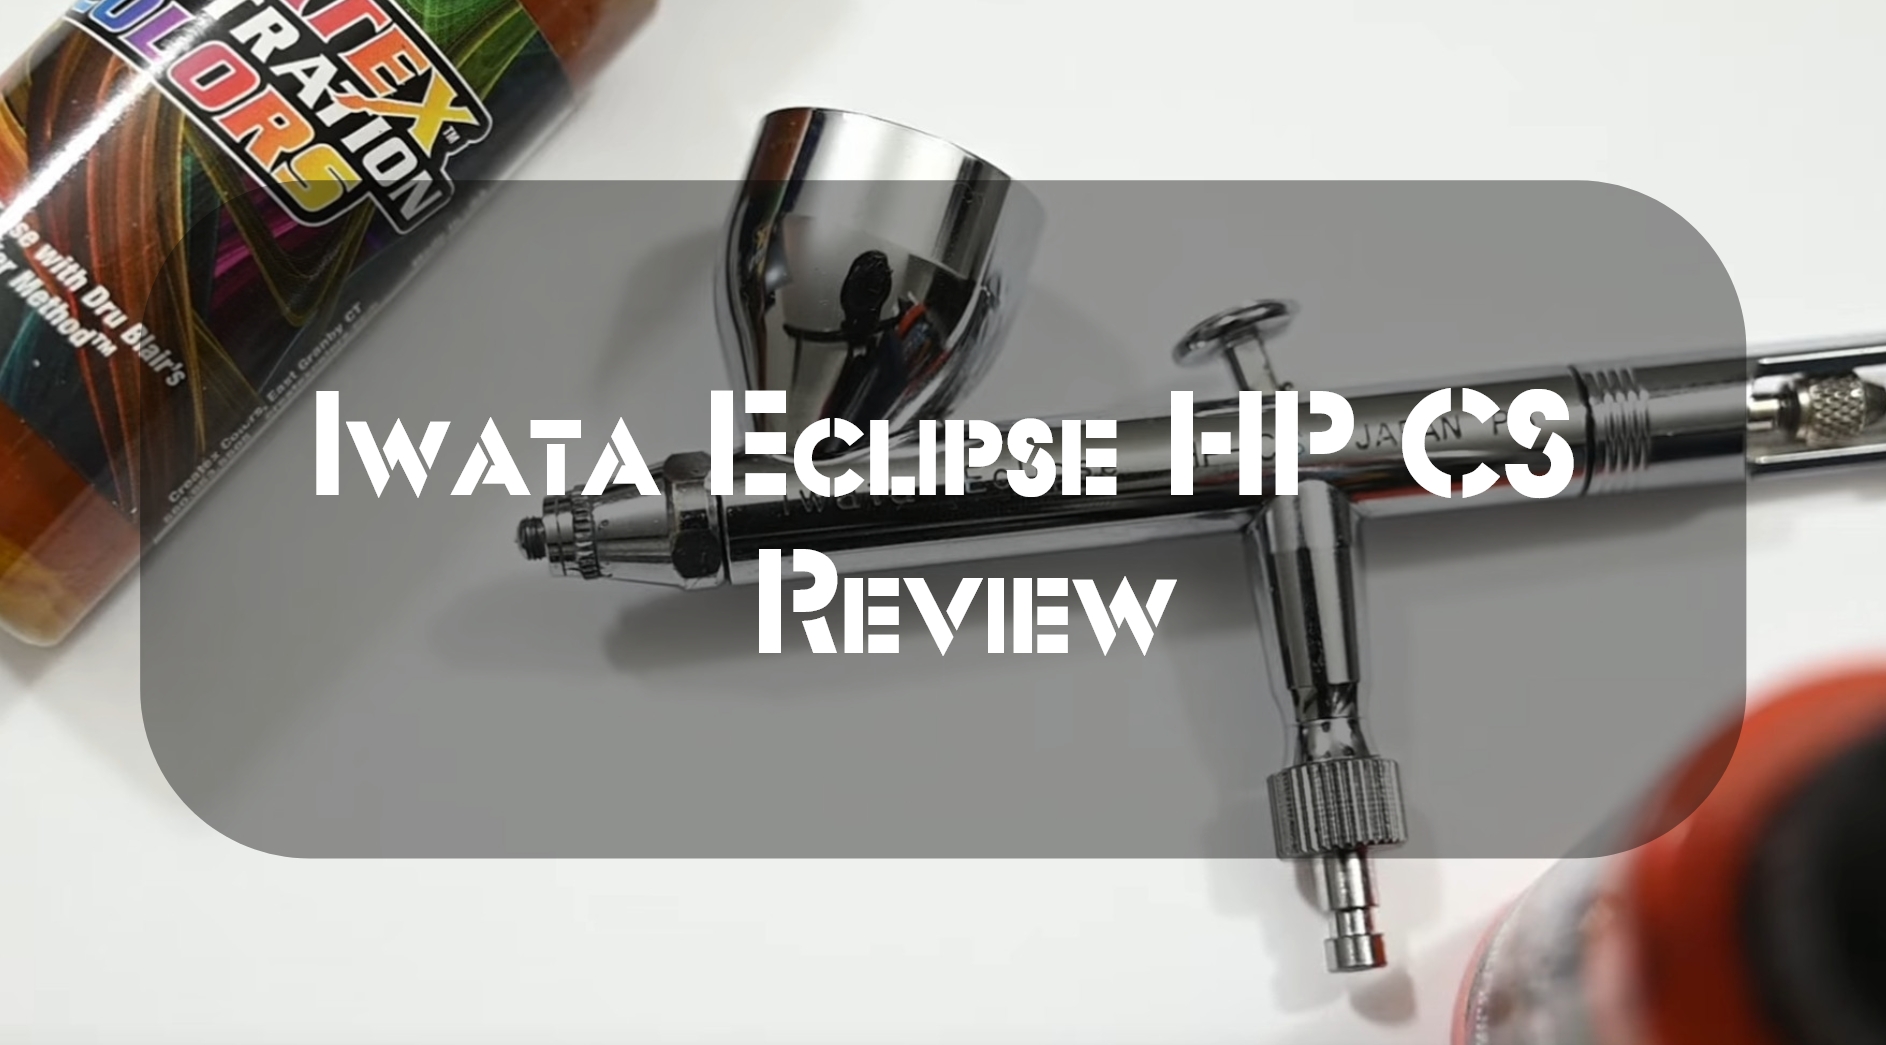 Iwata Eclipse HP CS Review